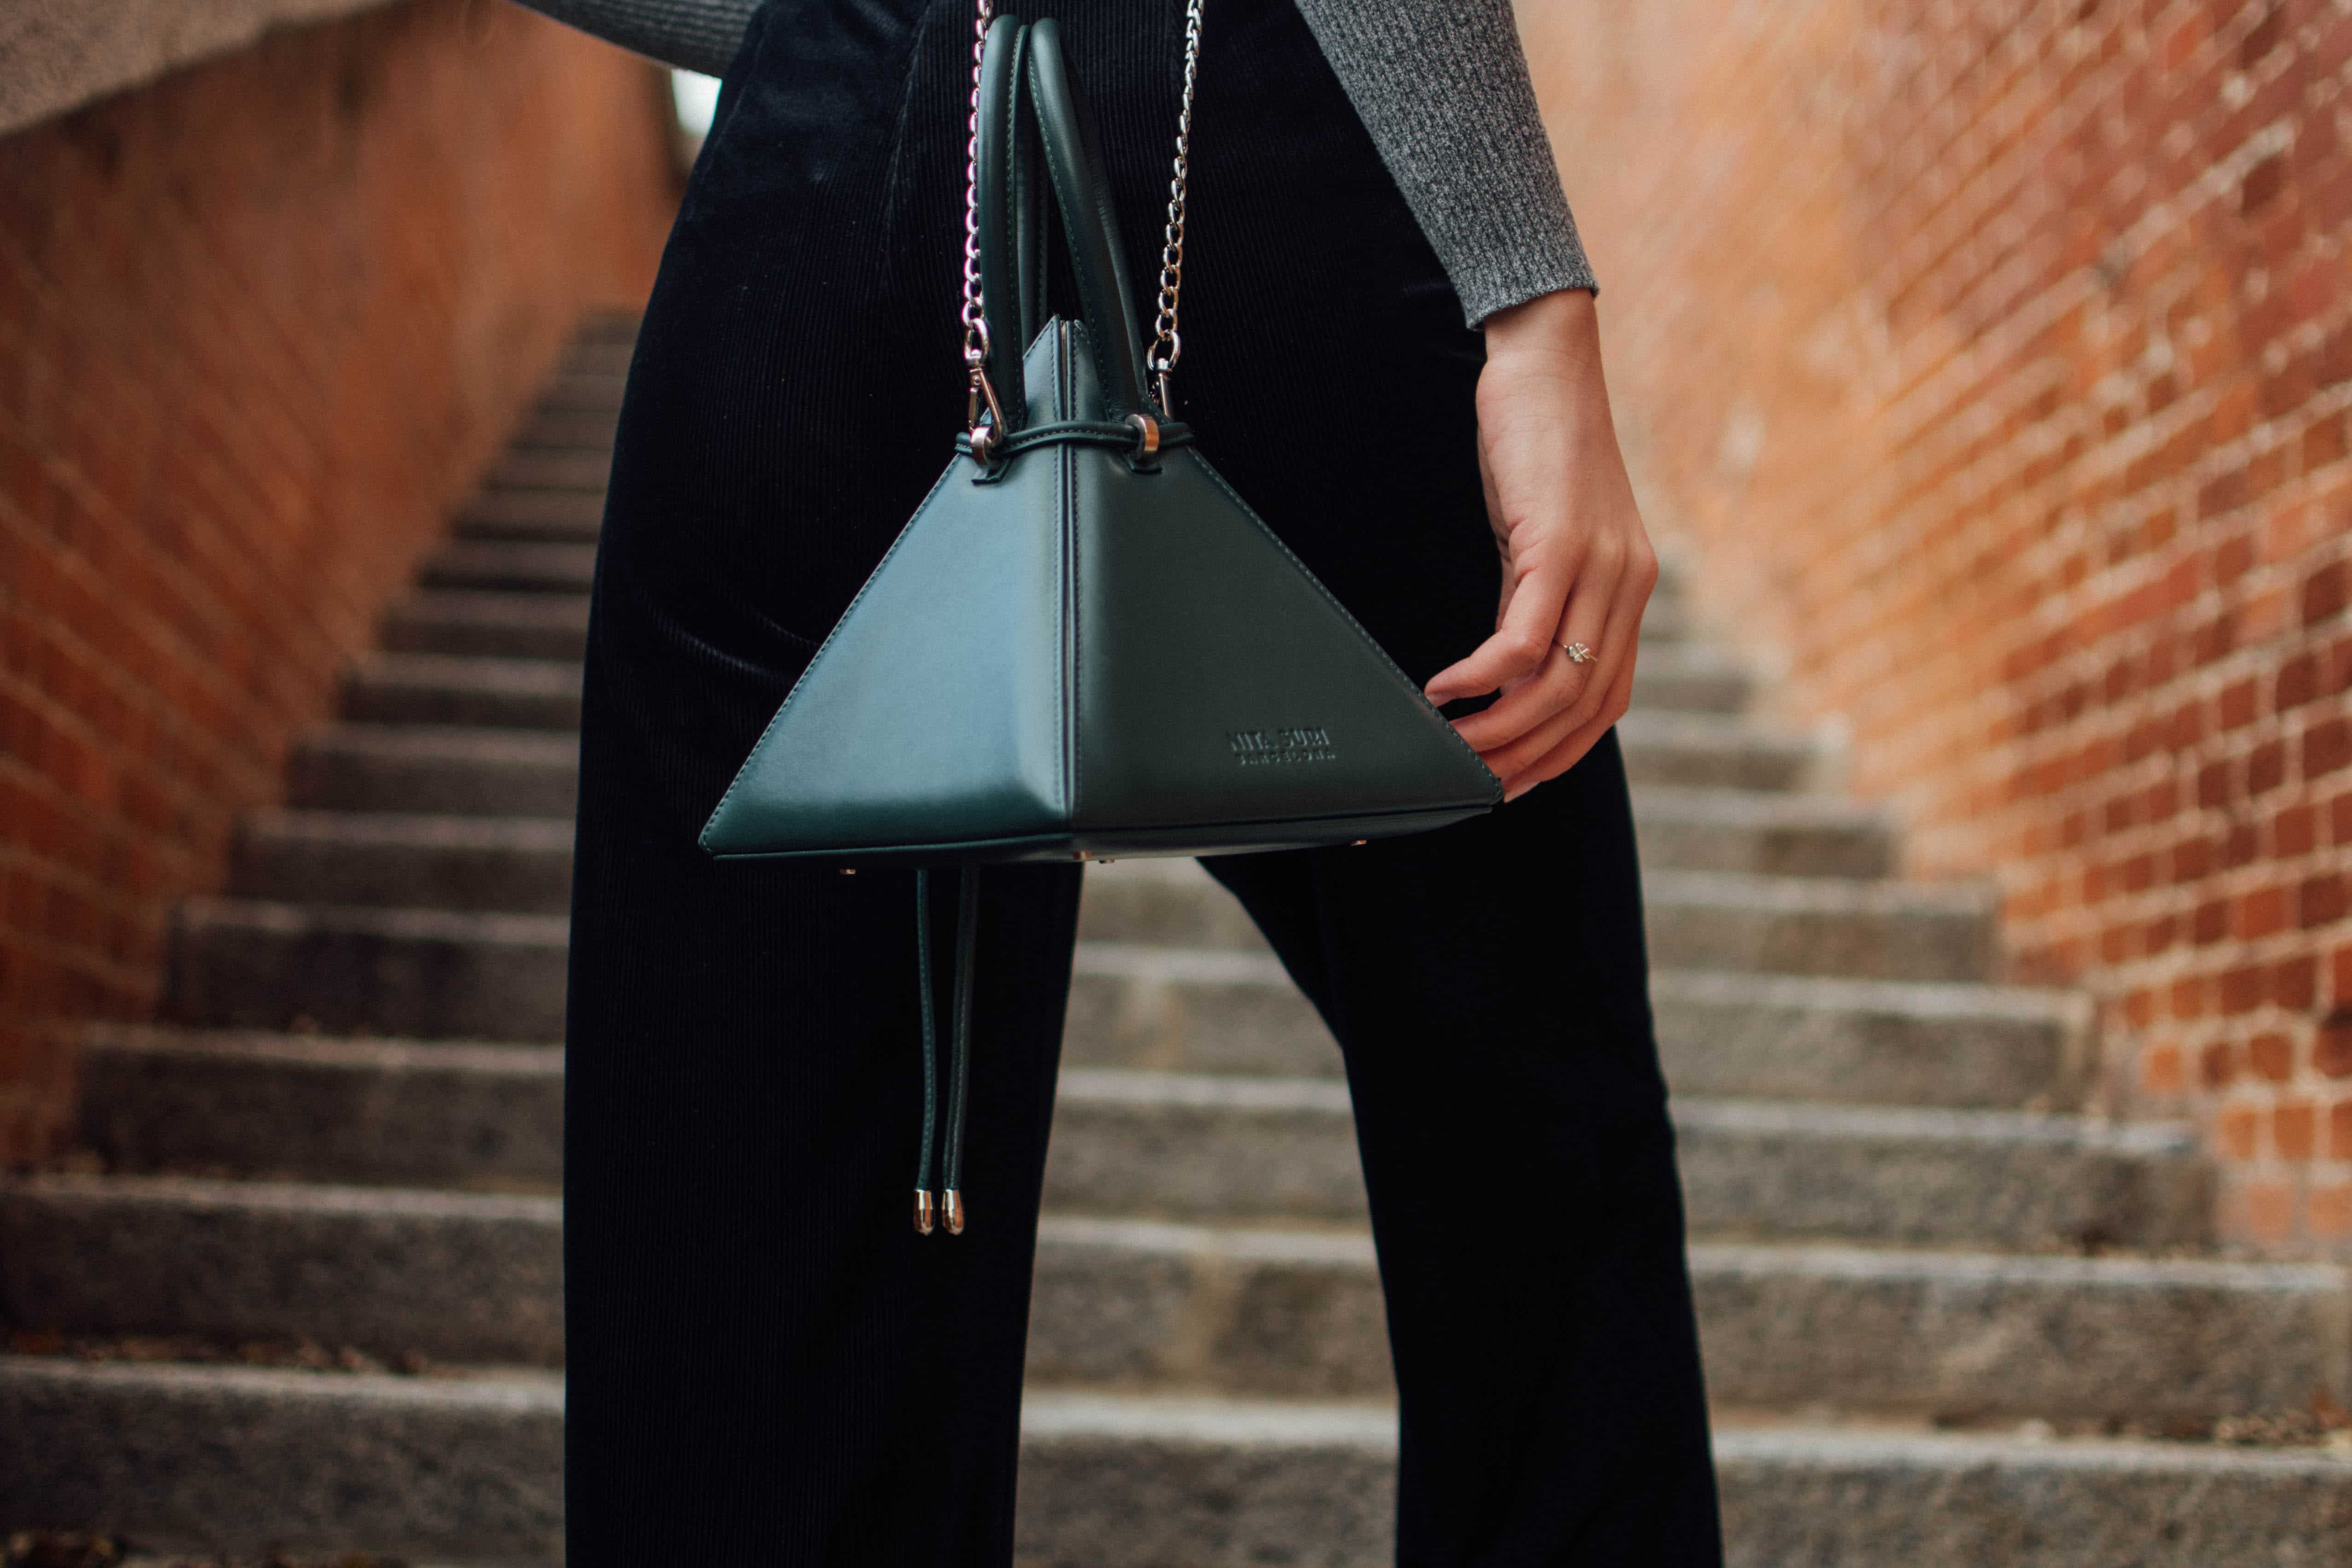 moderngenic 'Pyramid' Luxury Handbag, Fashion Cross-body Shoulder Bag, Soft  PU Leather Designer Handbag for Women/Girls (Blue): Handbags: Amazon.com